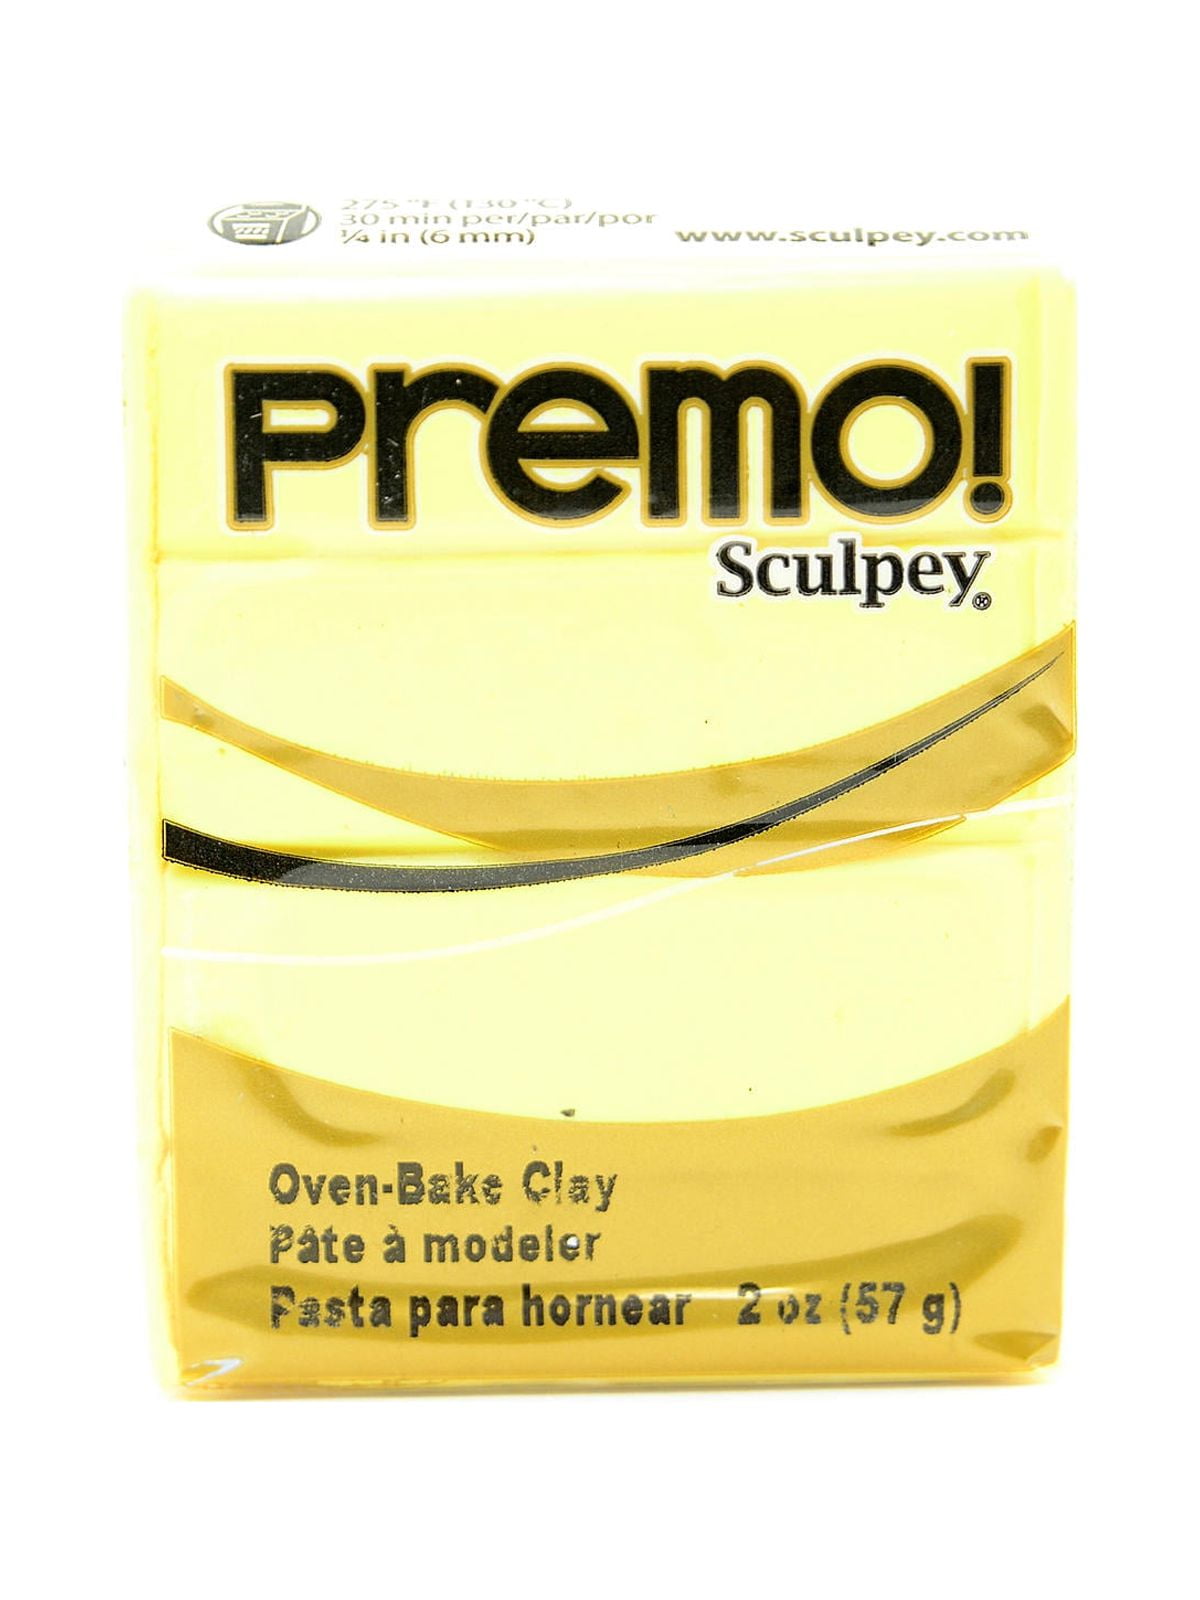 Premo Premium Polymer Clay translucent white, 2 oz. (pack of 5